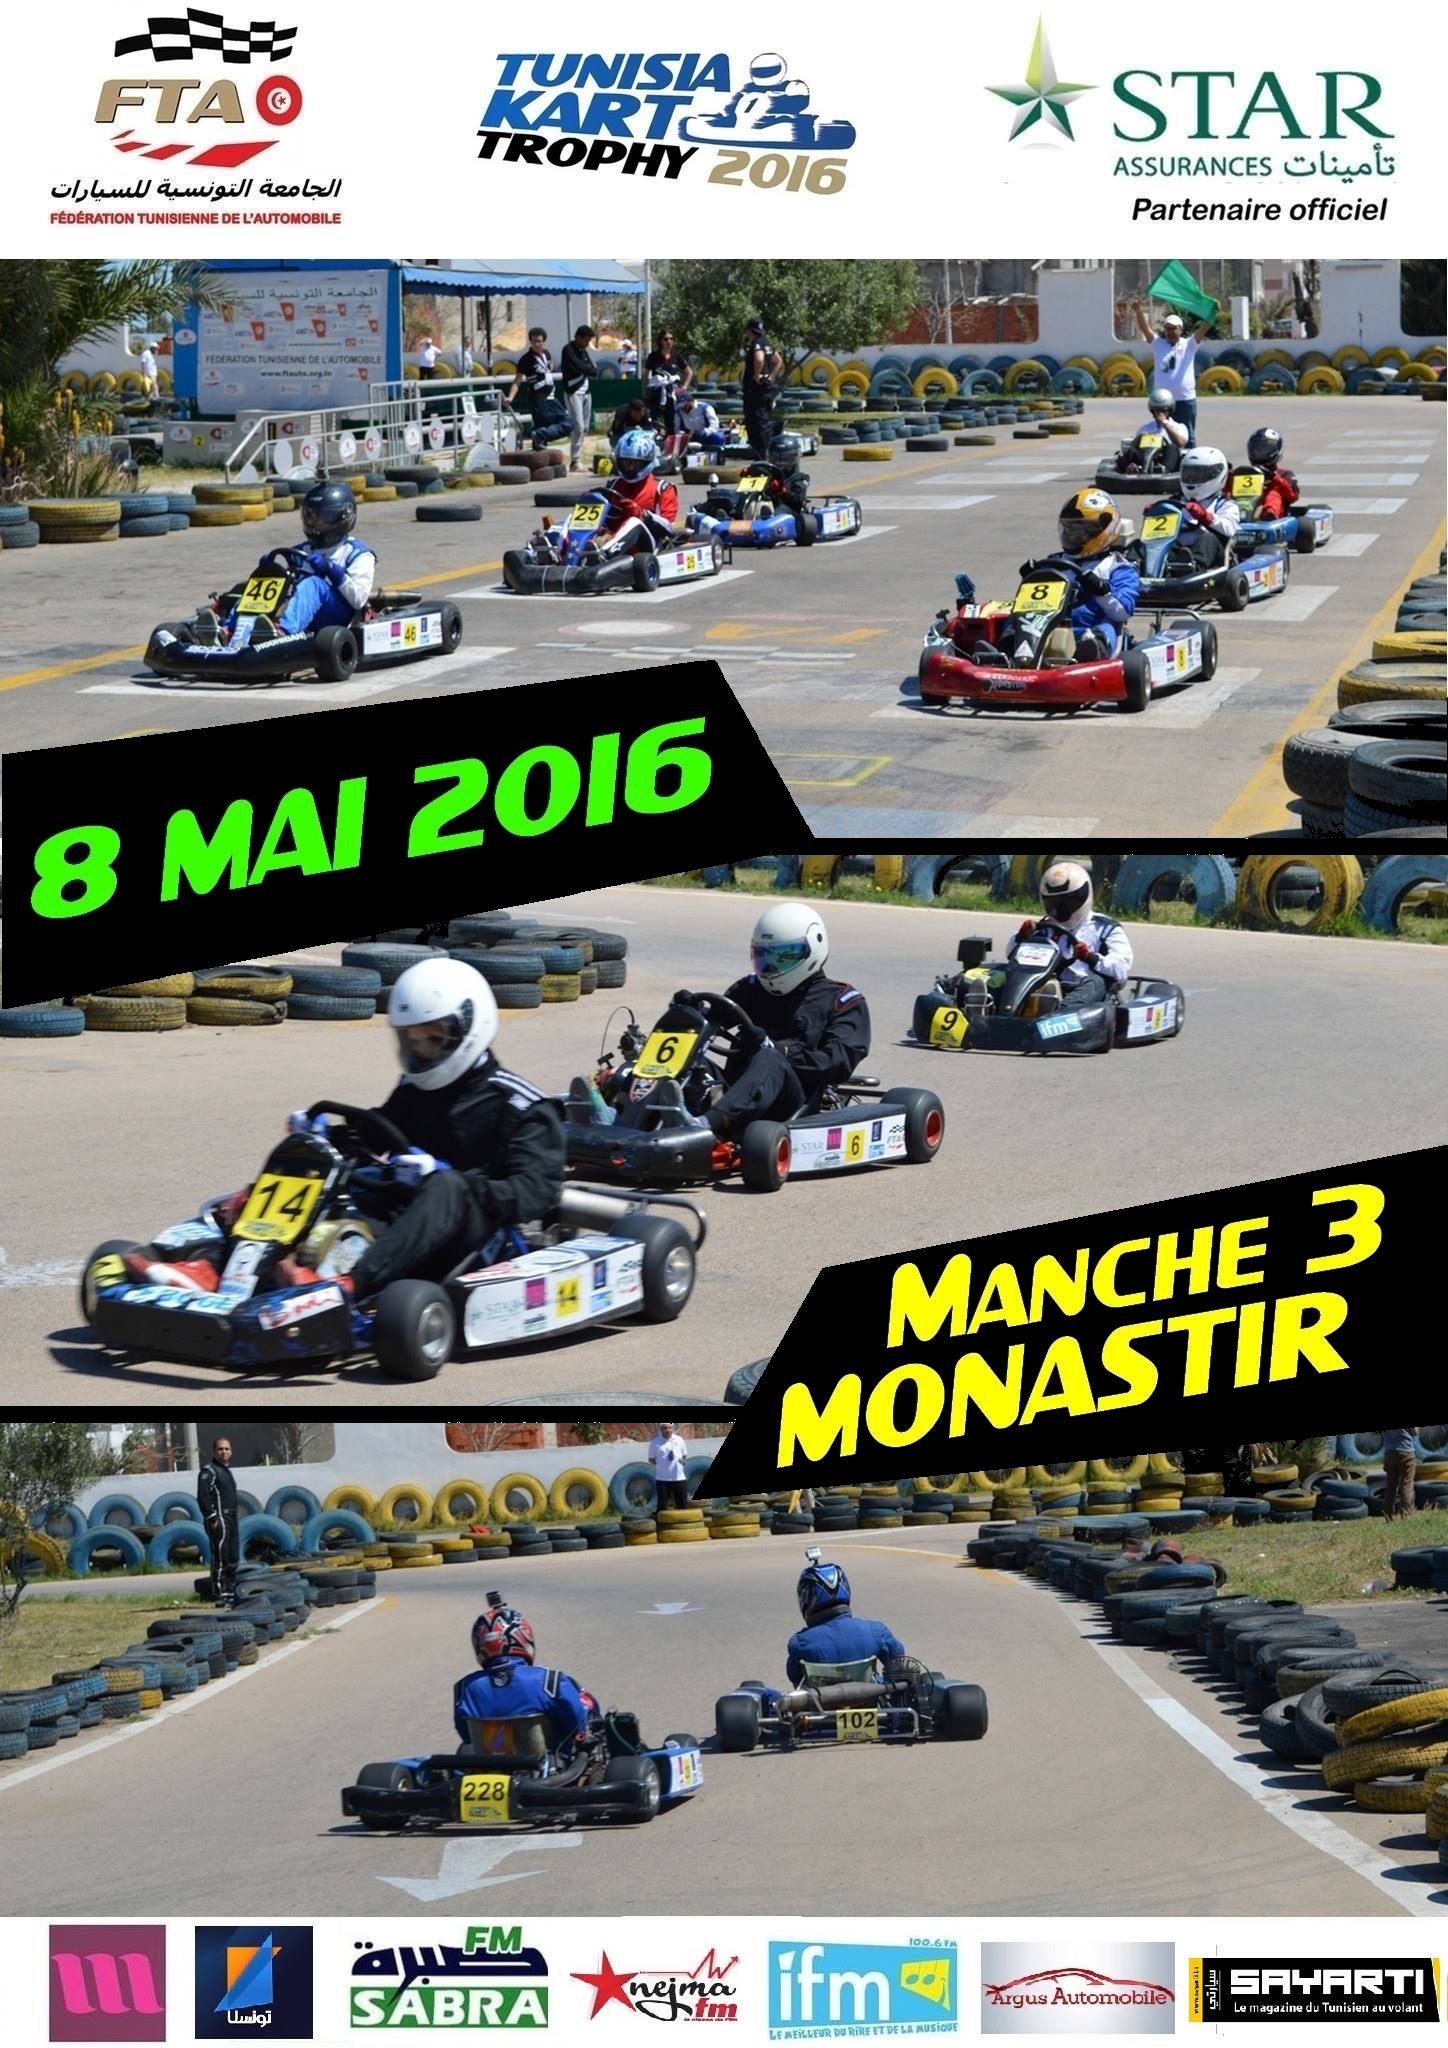 Manche 3 – Tunisia Kart Trophy 2016